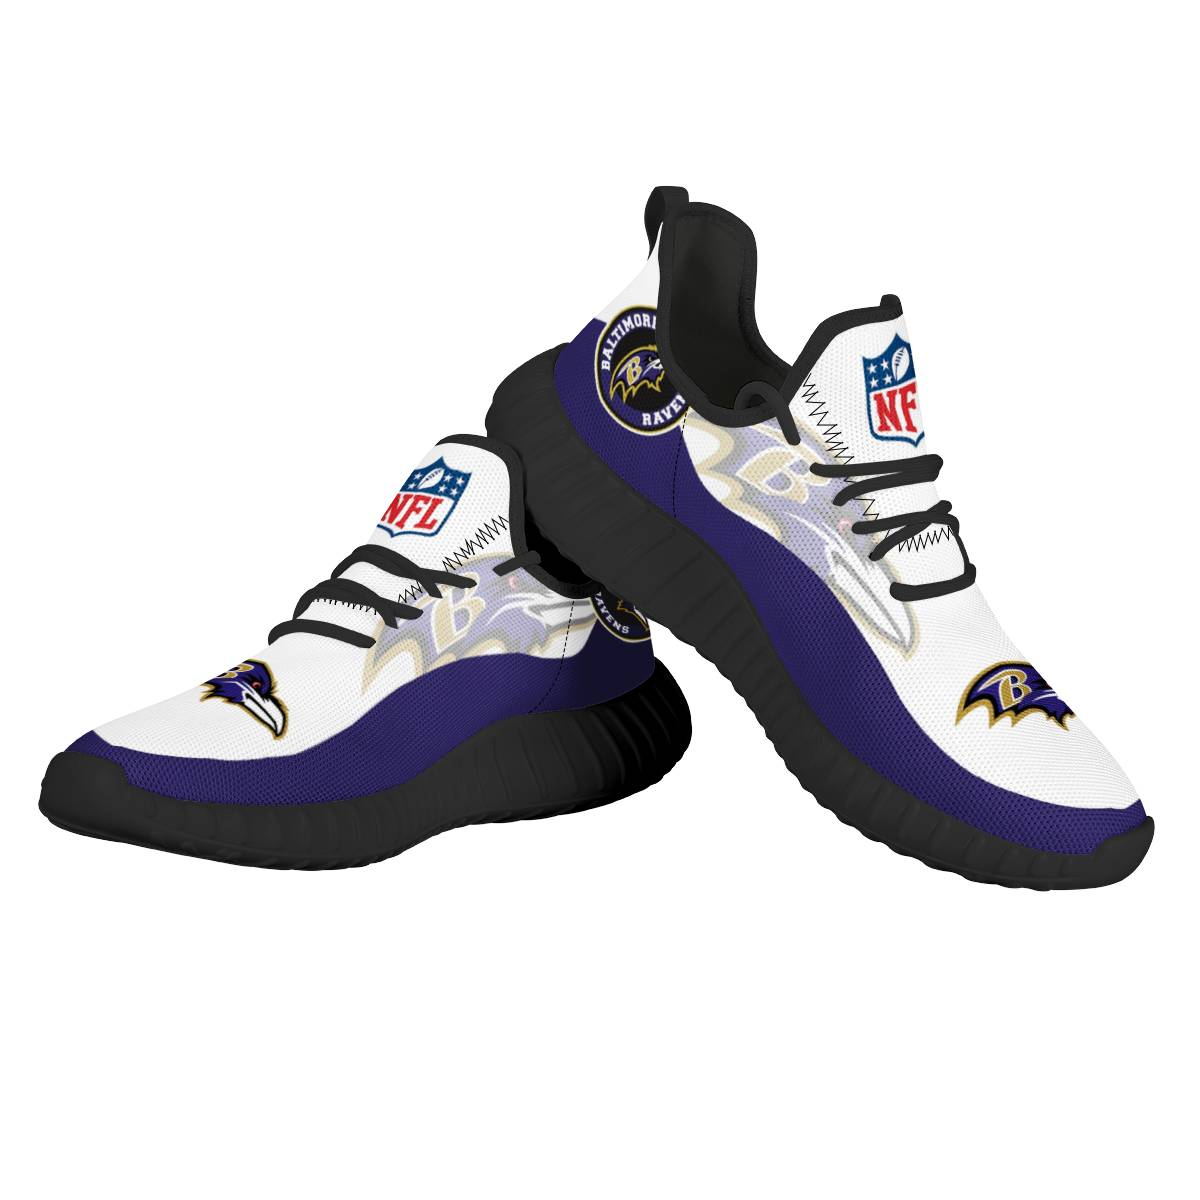 Women's NFL Baltimore Ravens Mesh Knit Sneakers/Shoes 006